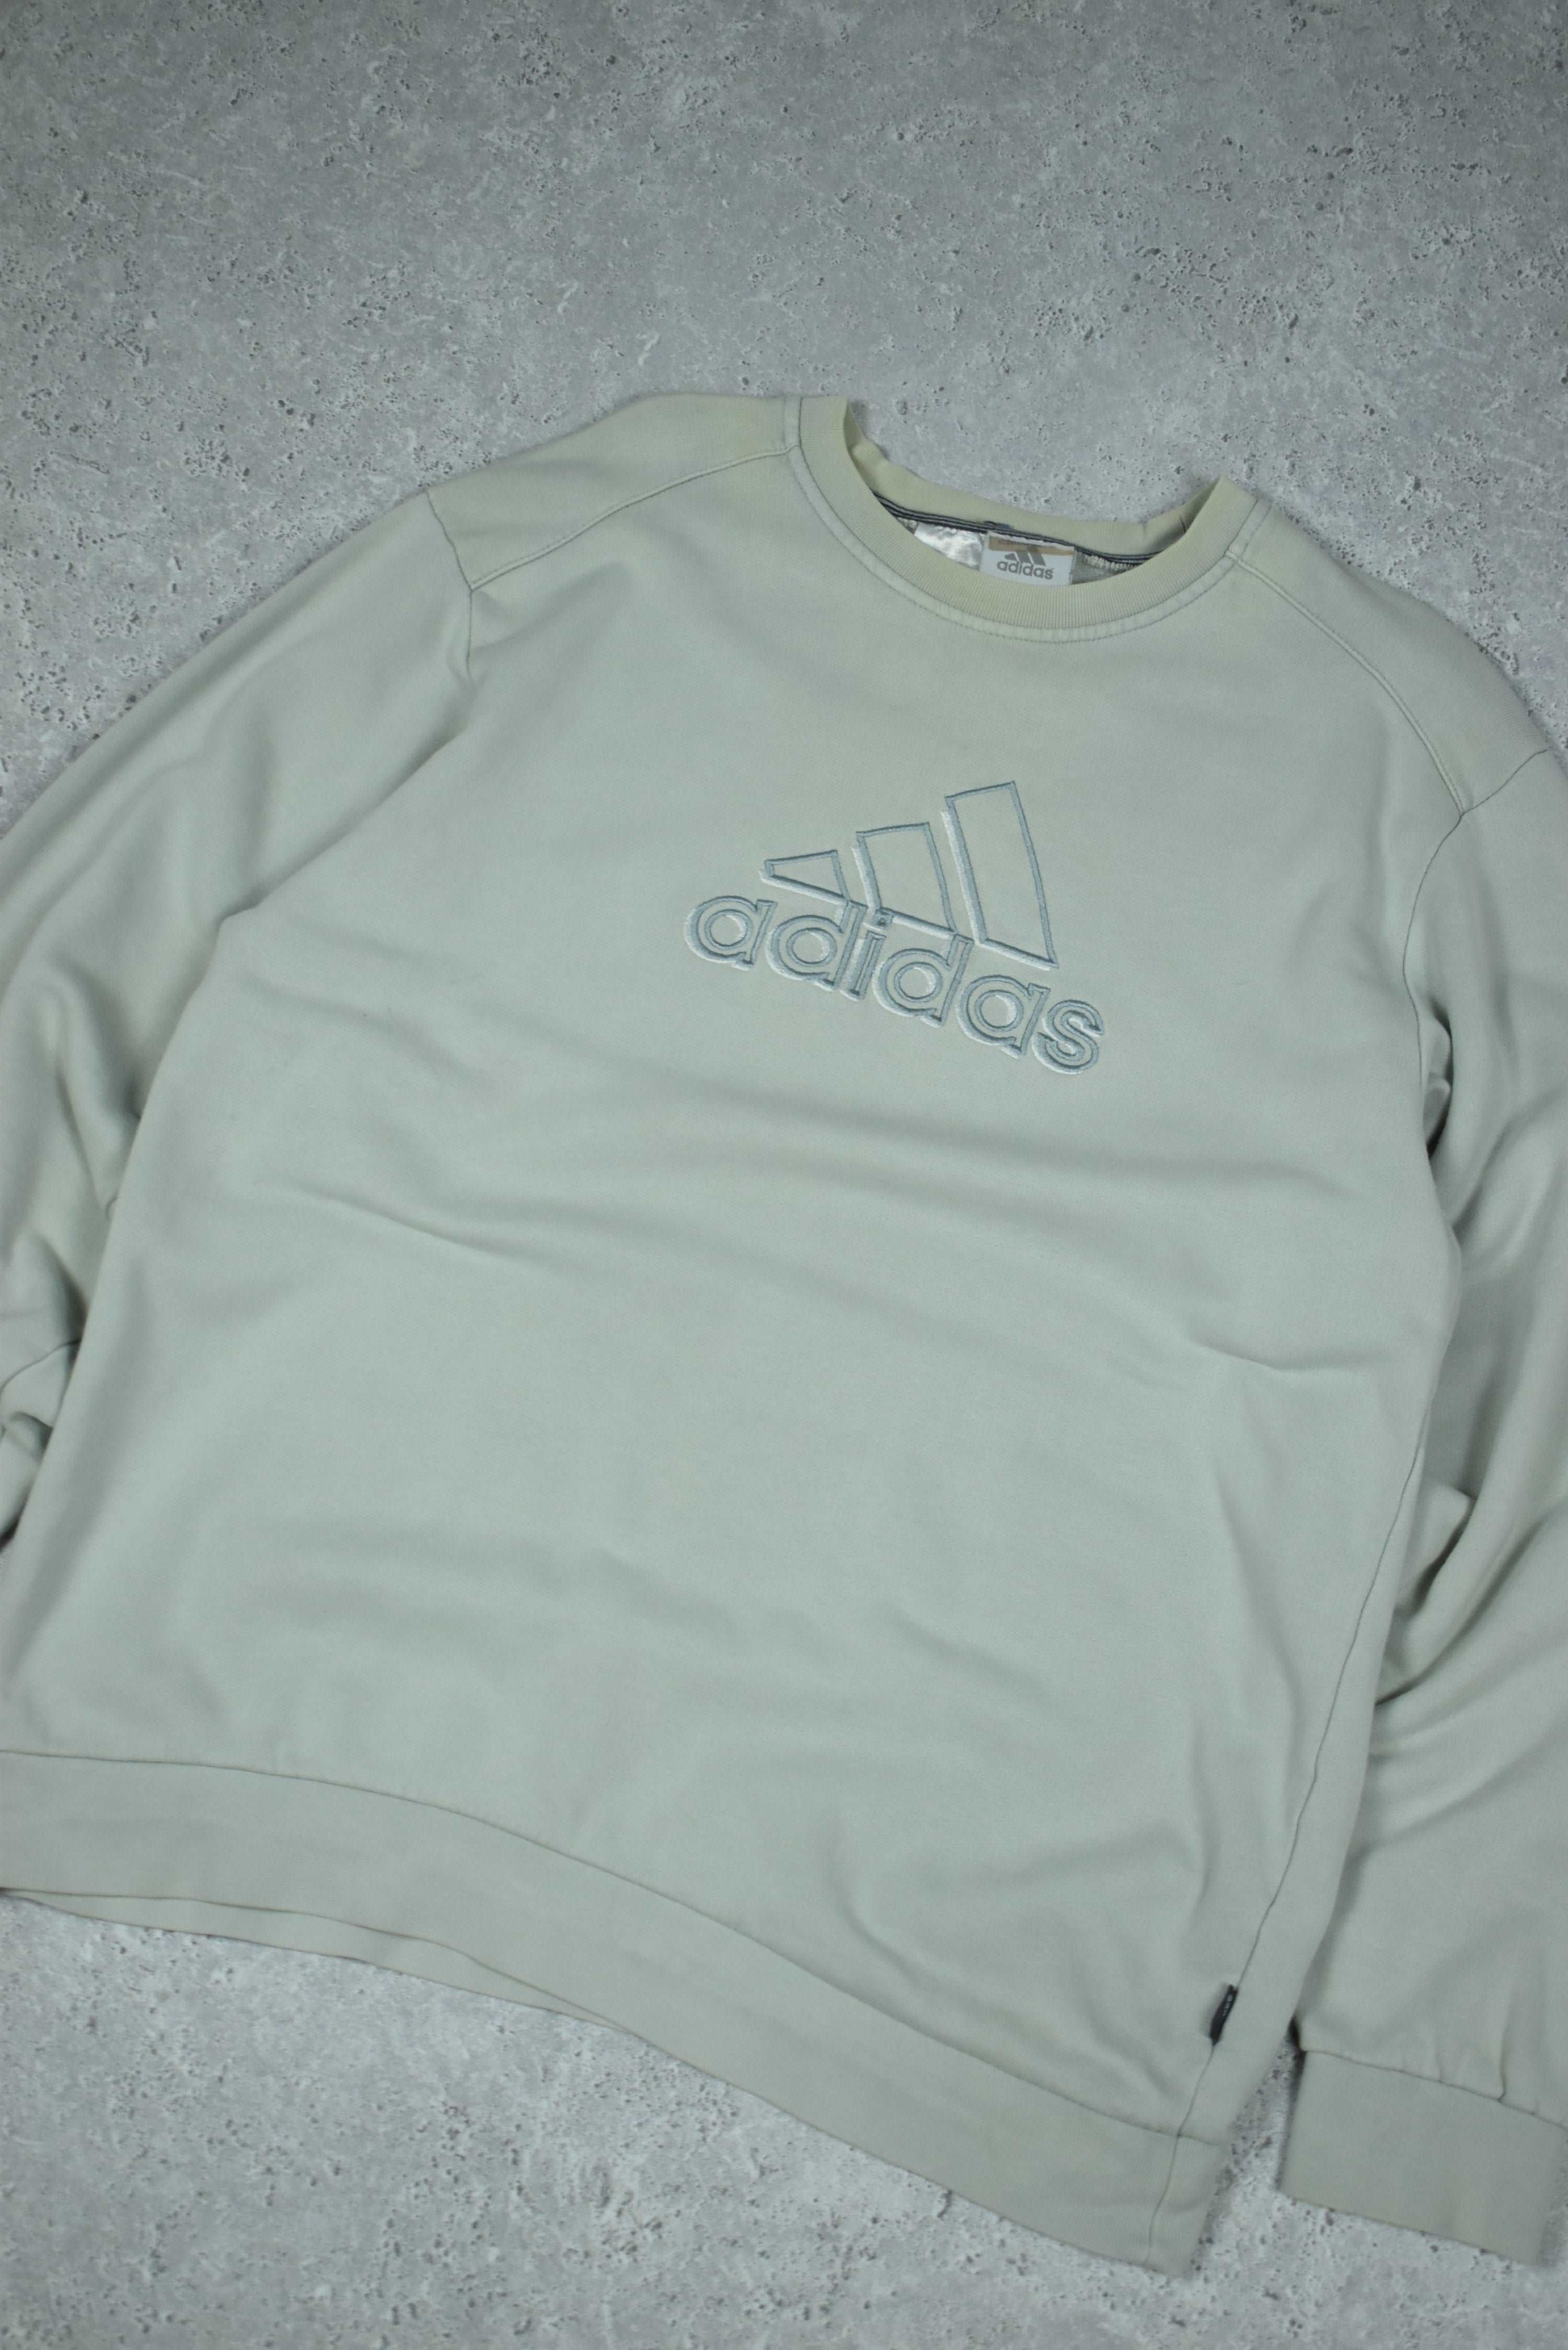 Vintage Adidas Embroidery Logo Sweatshirt Large